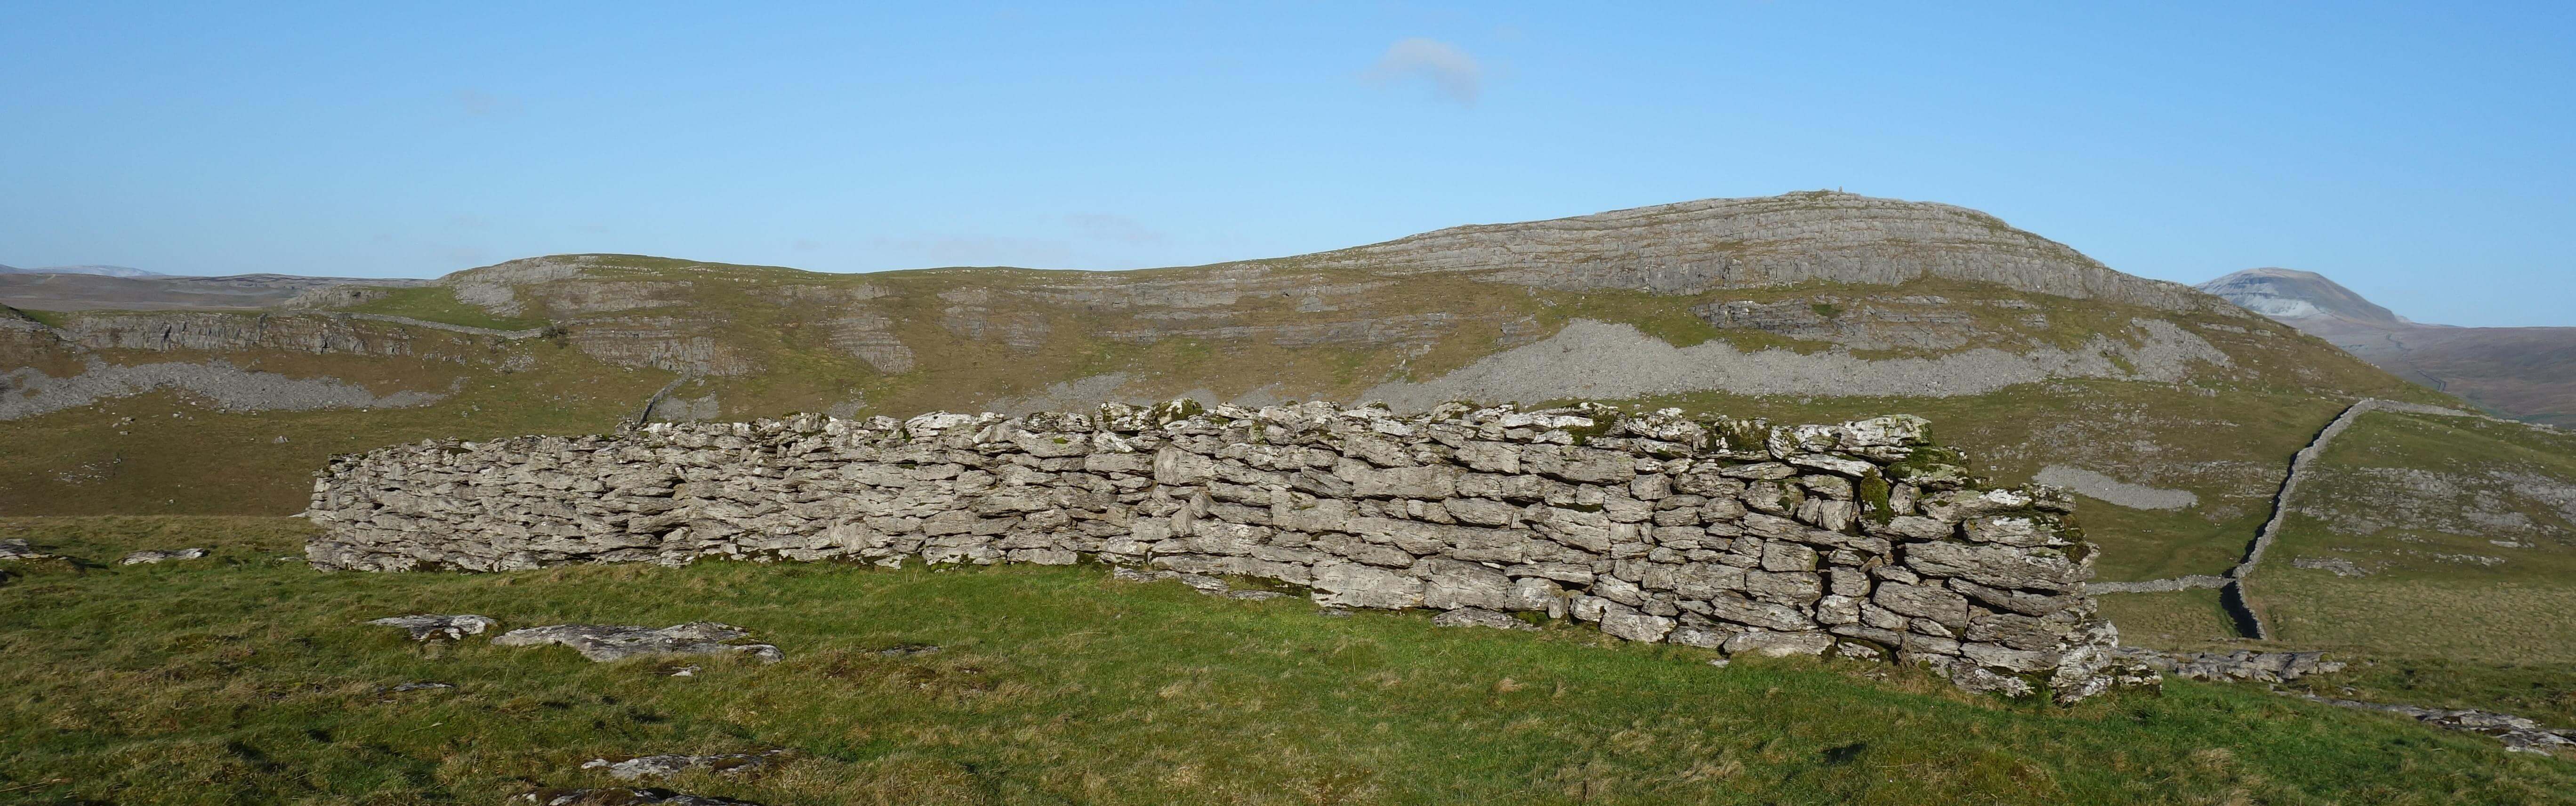 celtic wall